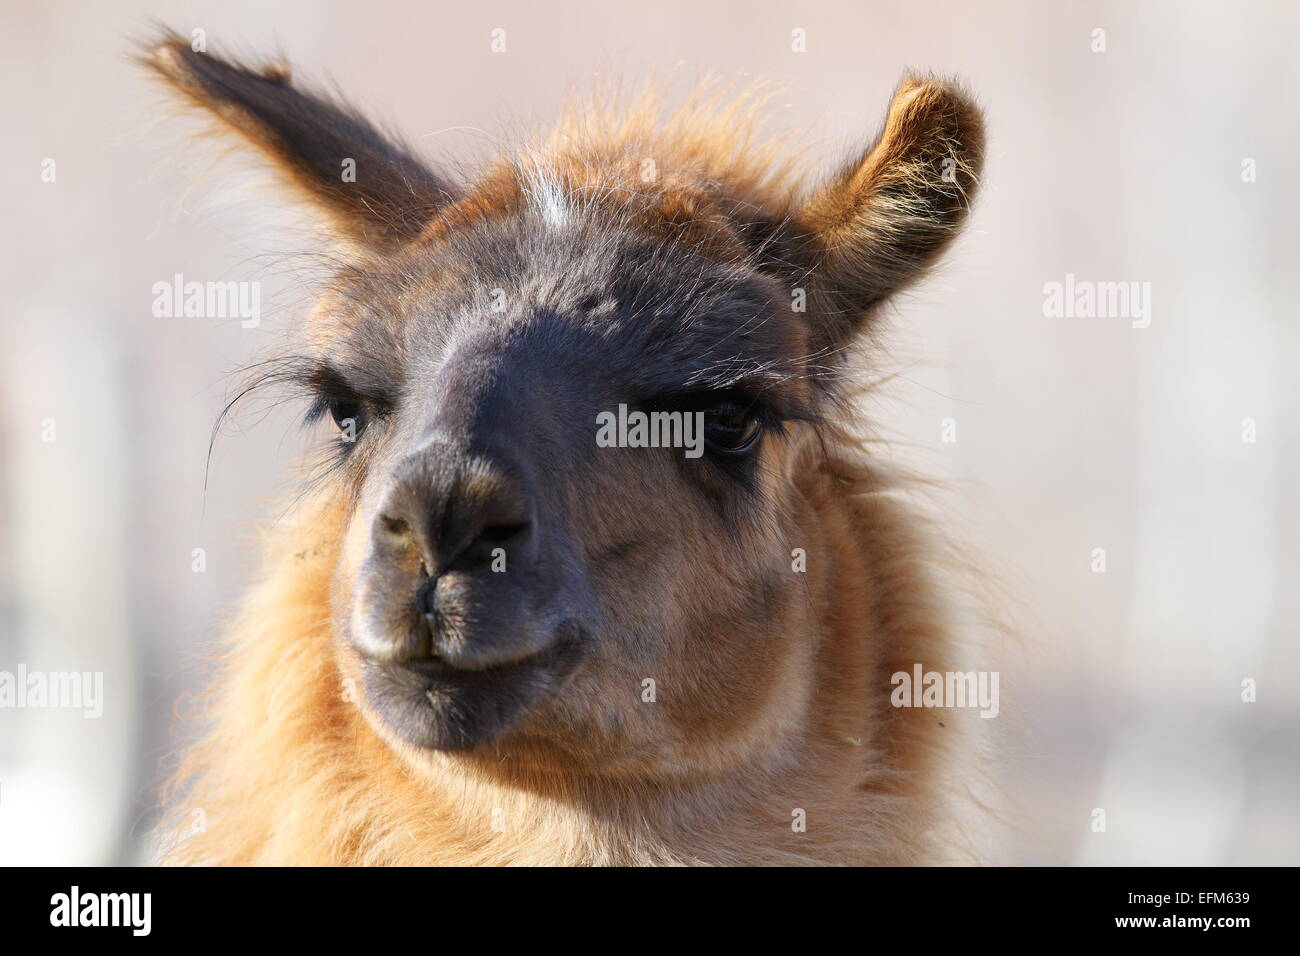 lama glama ( spitting llama ) looking at the camera, image made on a tame domesticated animal Stock Photo